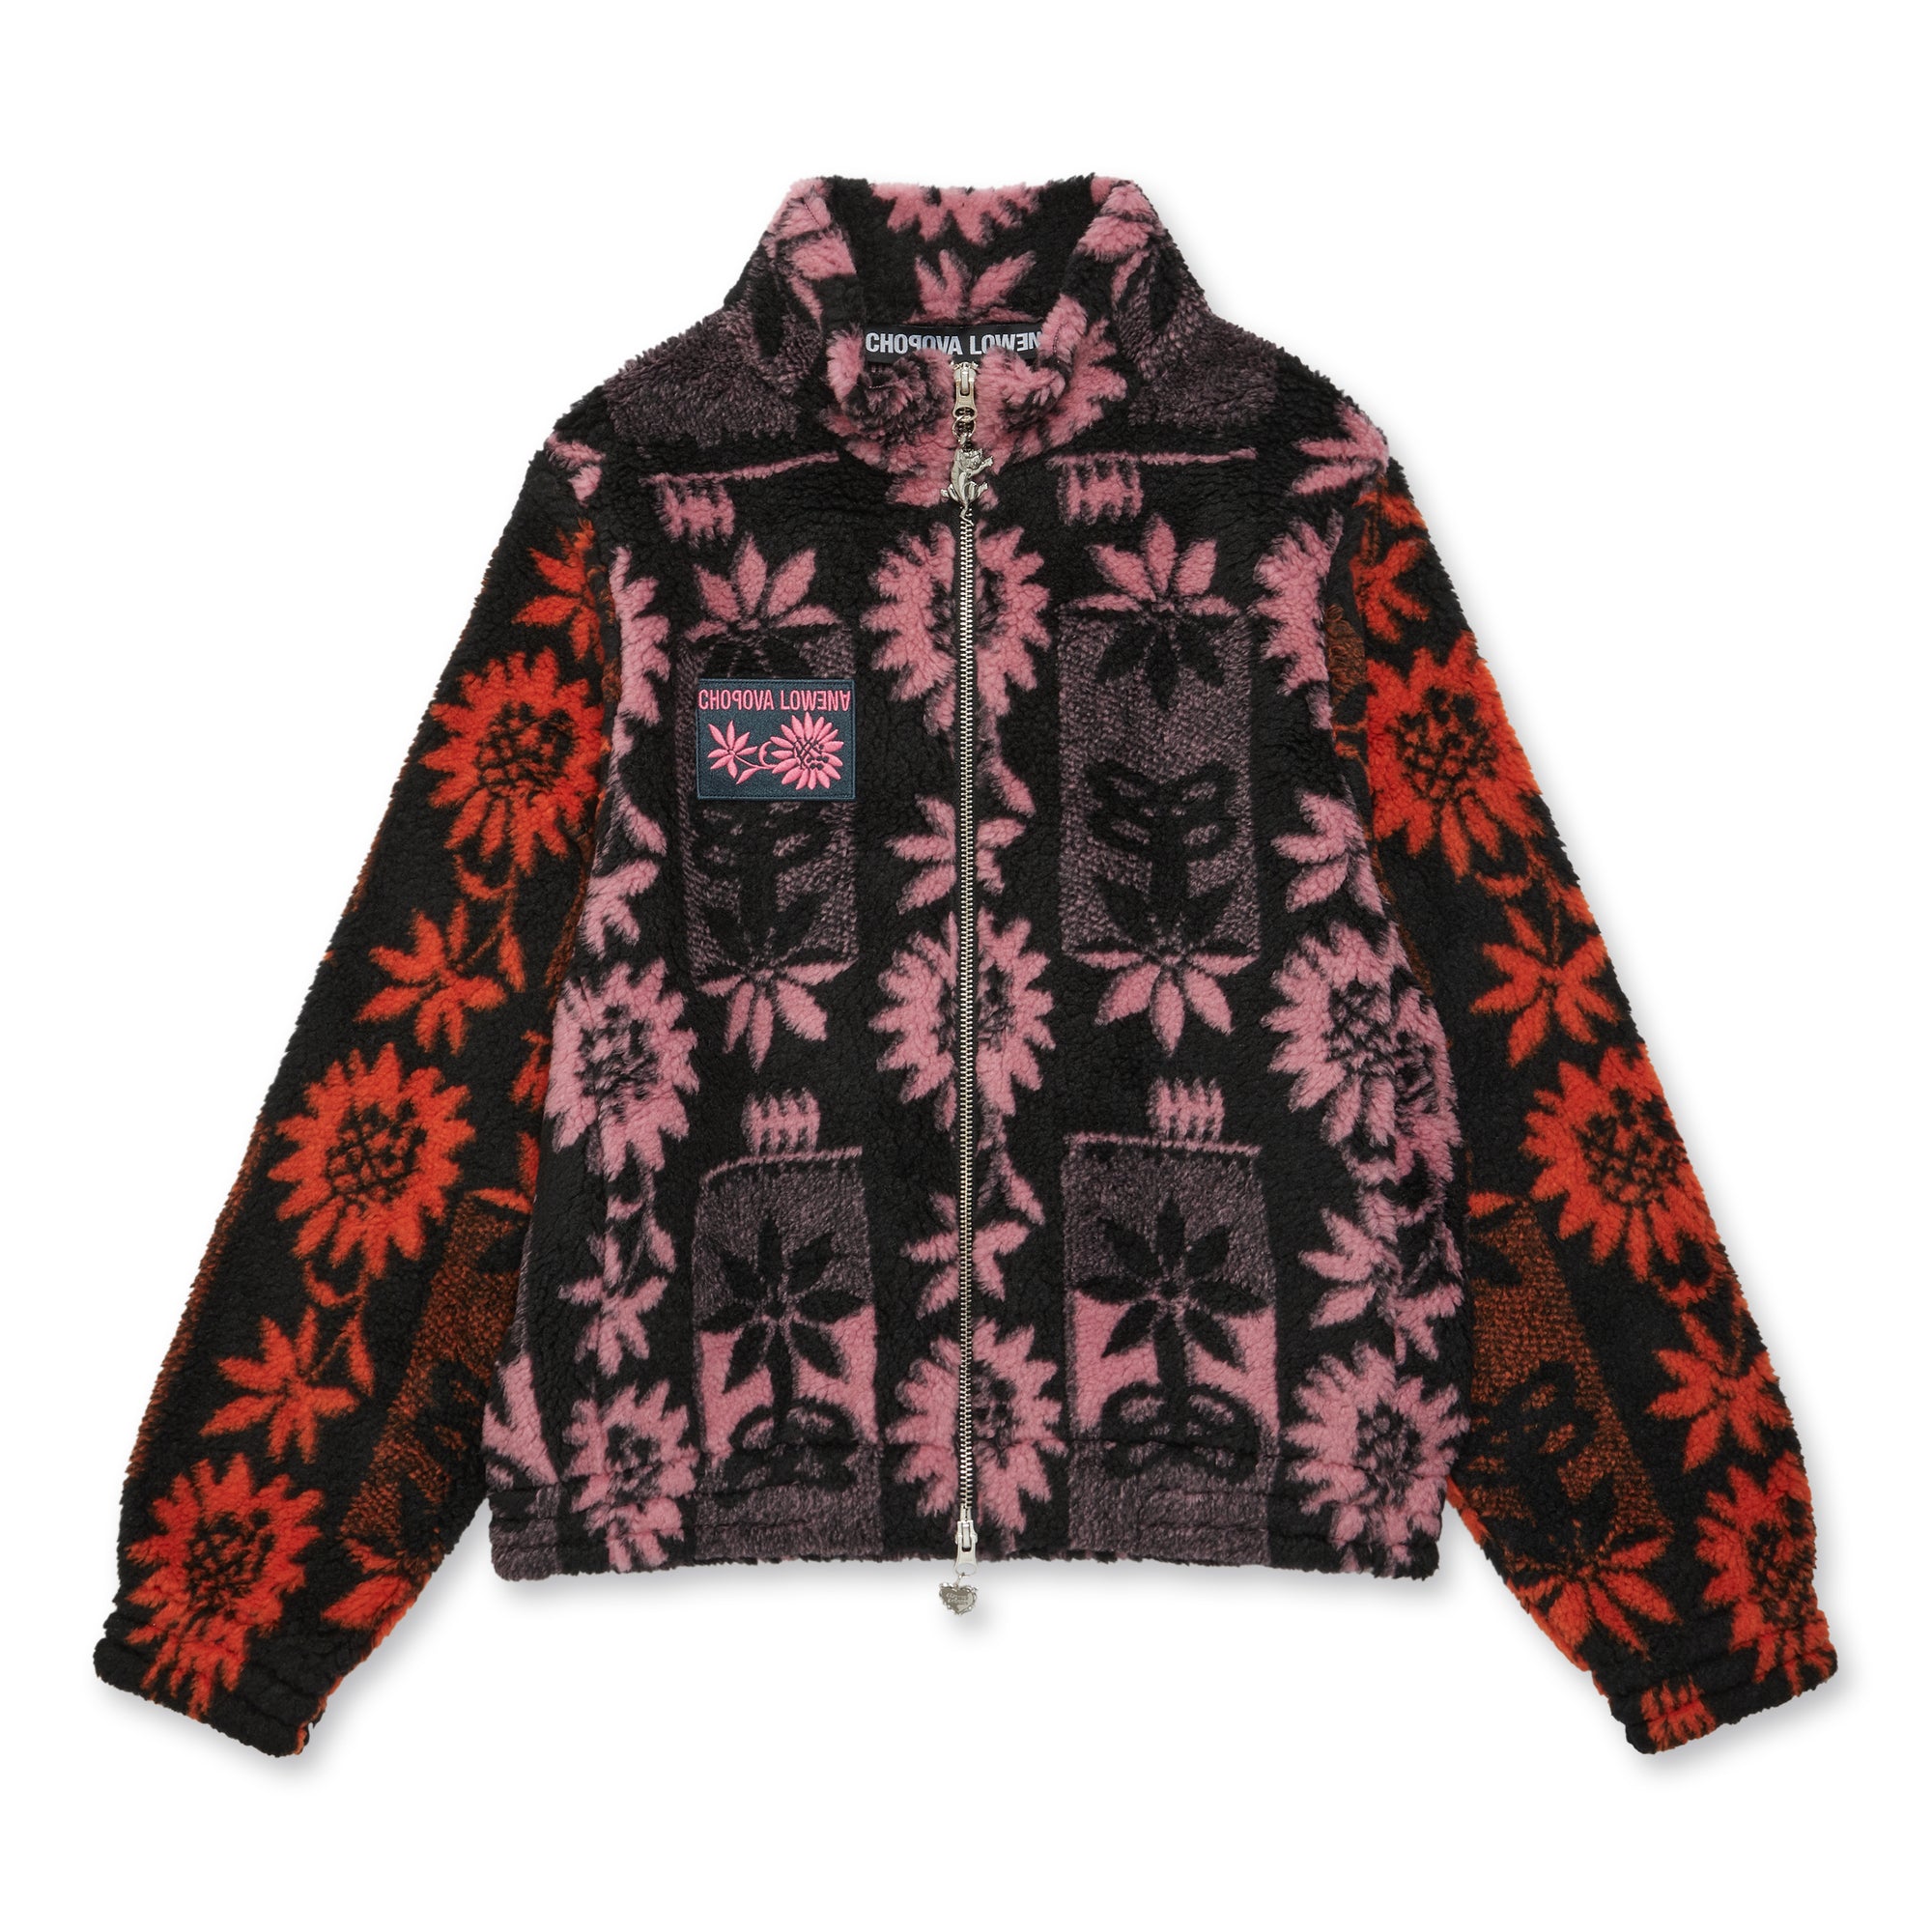 Chopova Lowena - Women’s Sunflower Knitted Fleece - (Pink/Orange) view 5